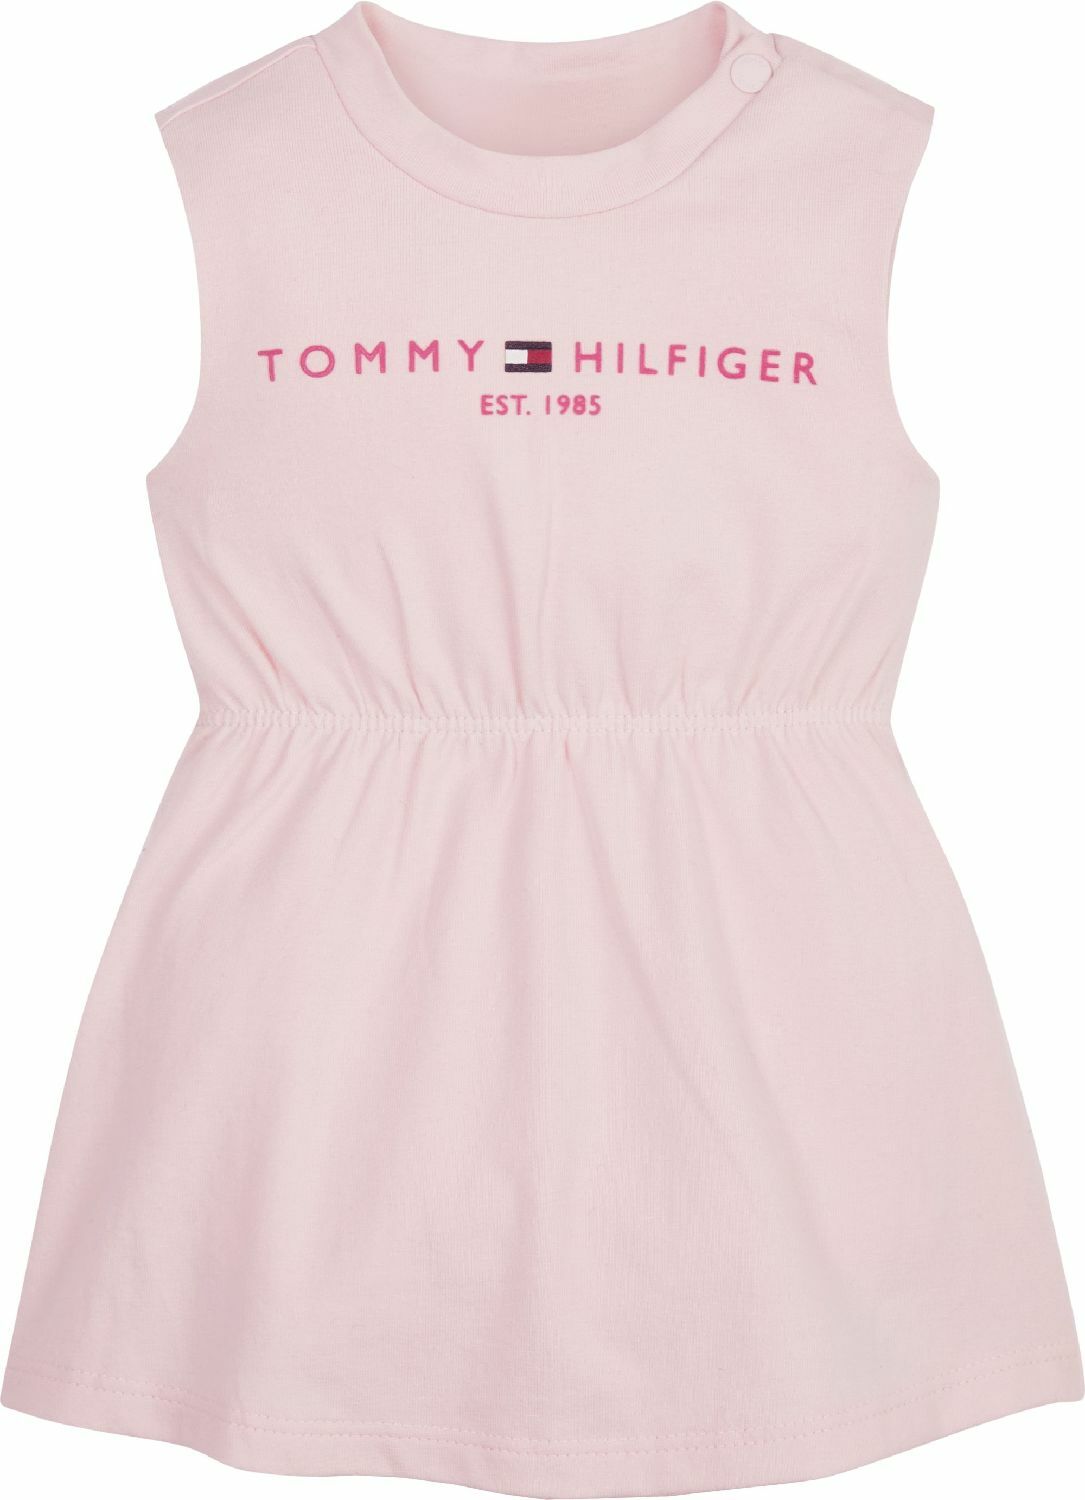 vrije tijd Streven parallel Tommy Hilfiger - Essential romper/dress -pink rose online kopen bij Prisca  Kindermode en Tienermode. KN0KN01625-TJ9 Prisca junior